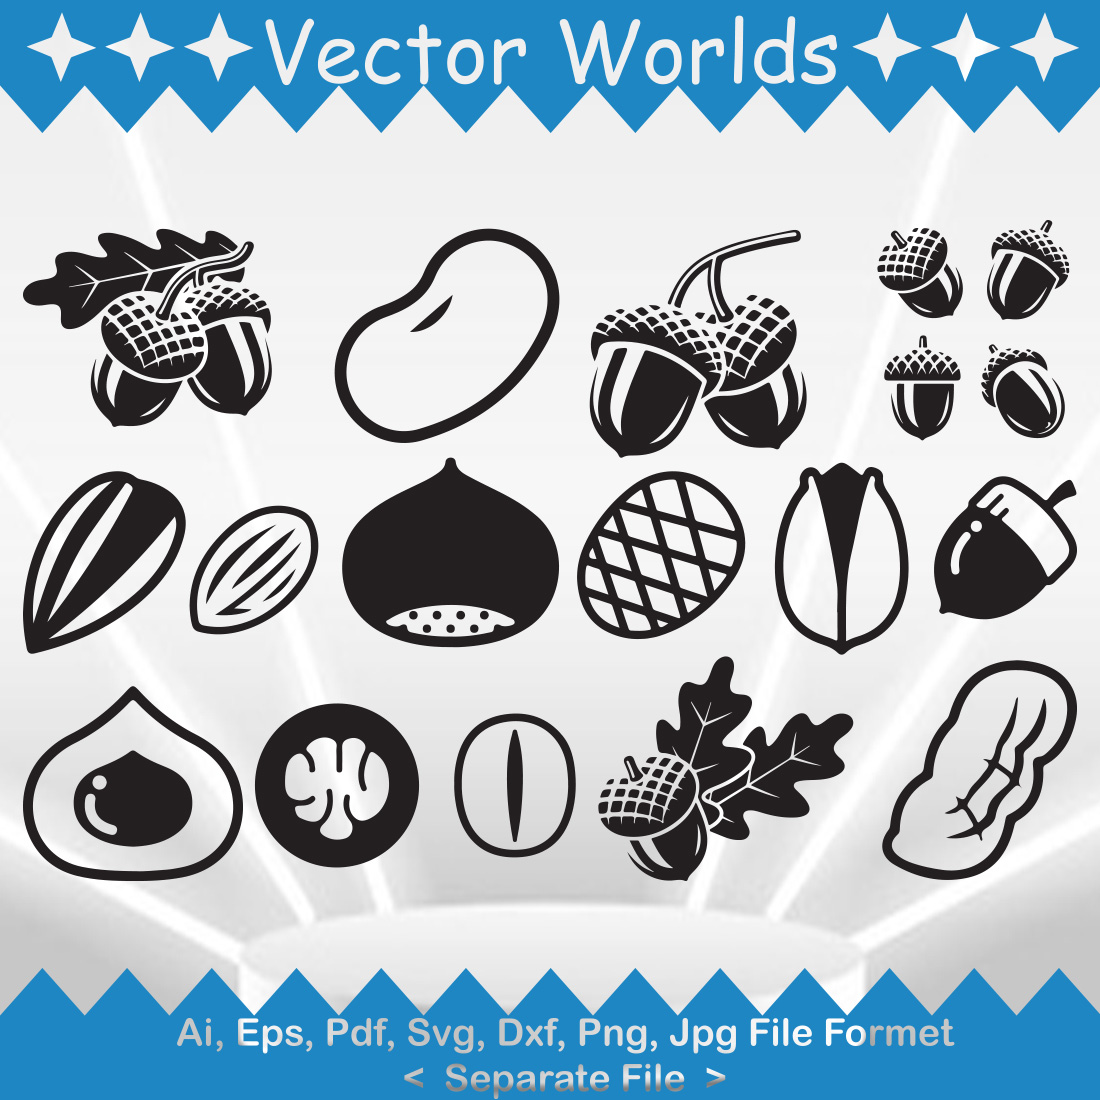 Nut SVG Vector Design cover image.